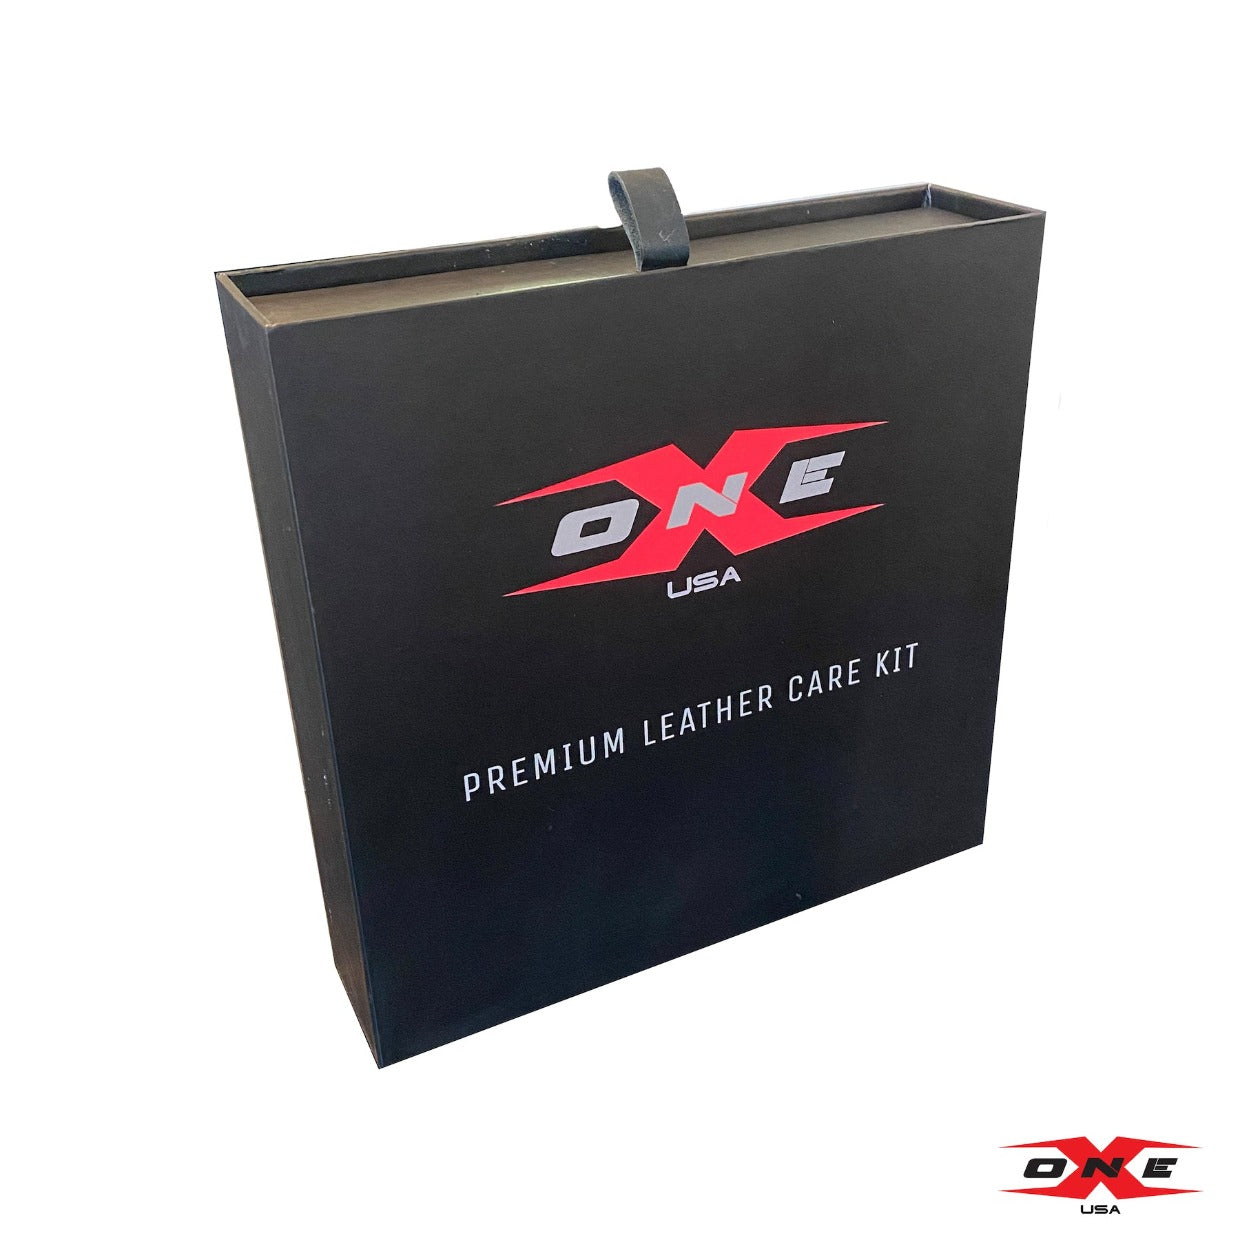 OneX USA Premium Leather Care Kit